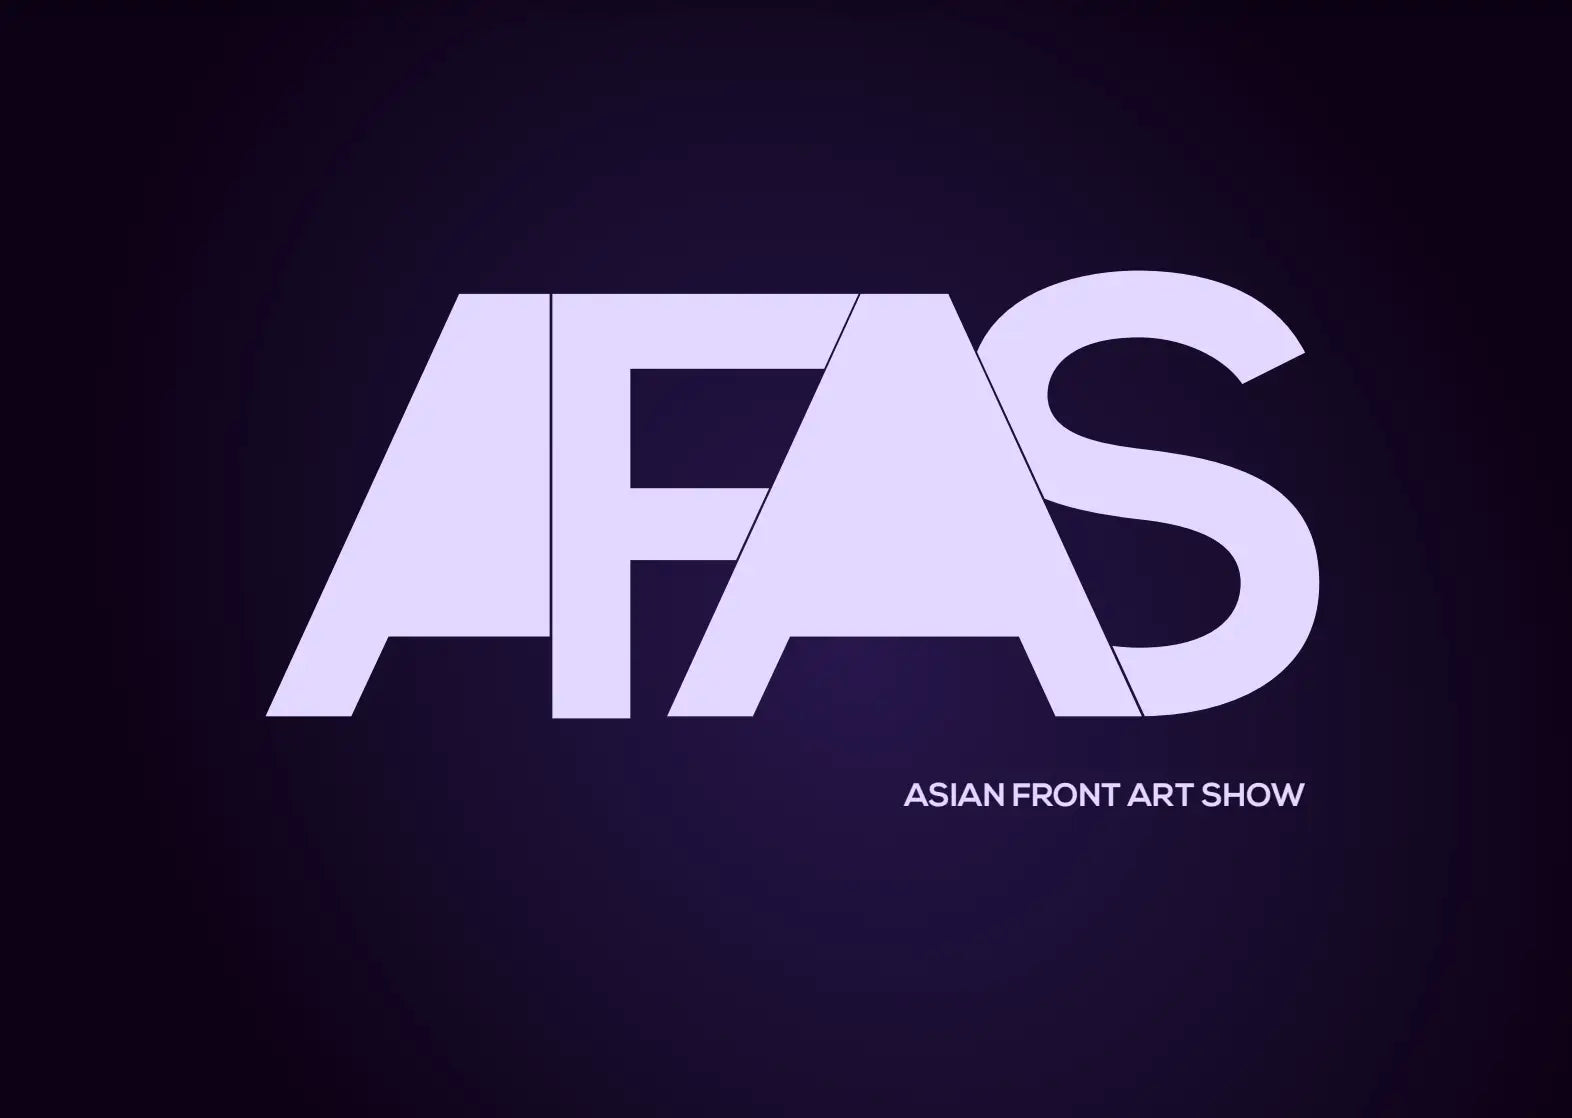 ASIAN FRONT ART SHOW Launch Event